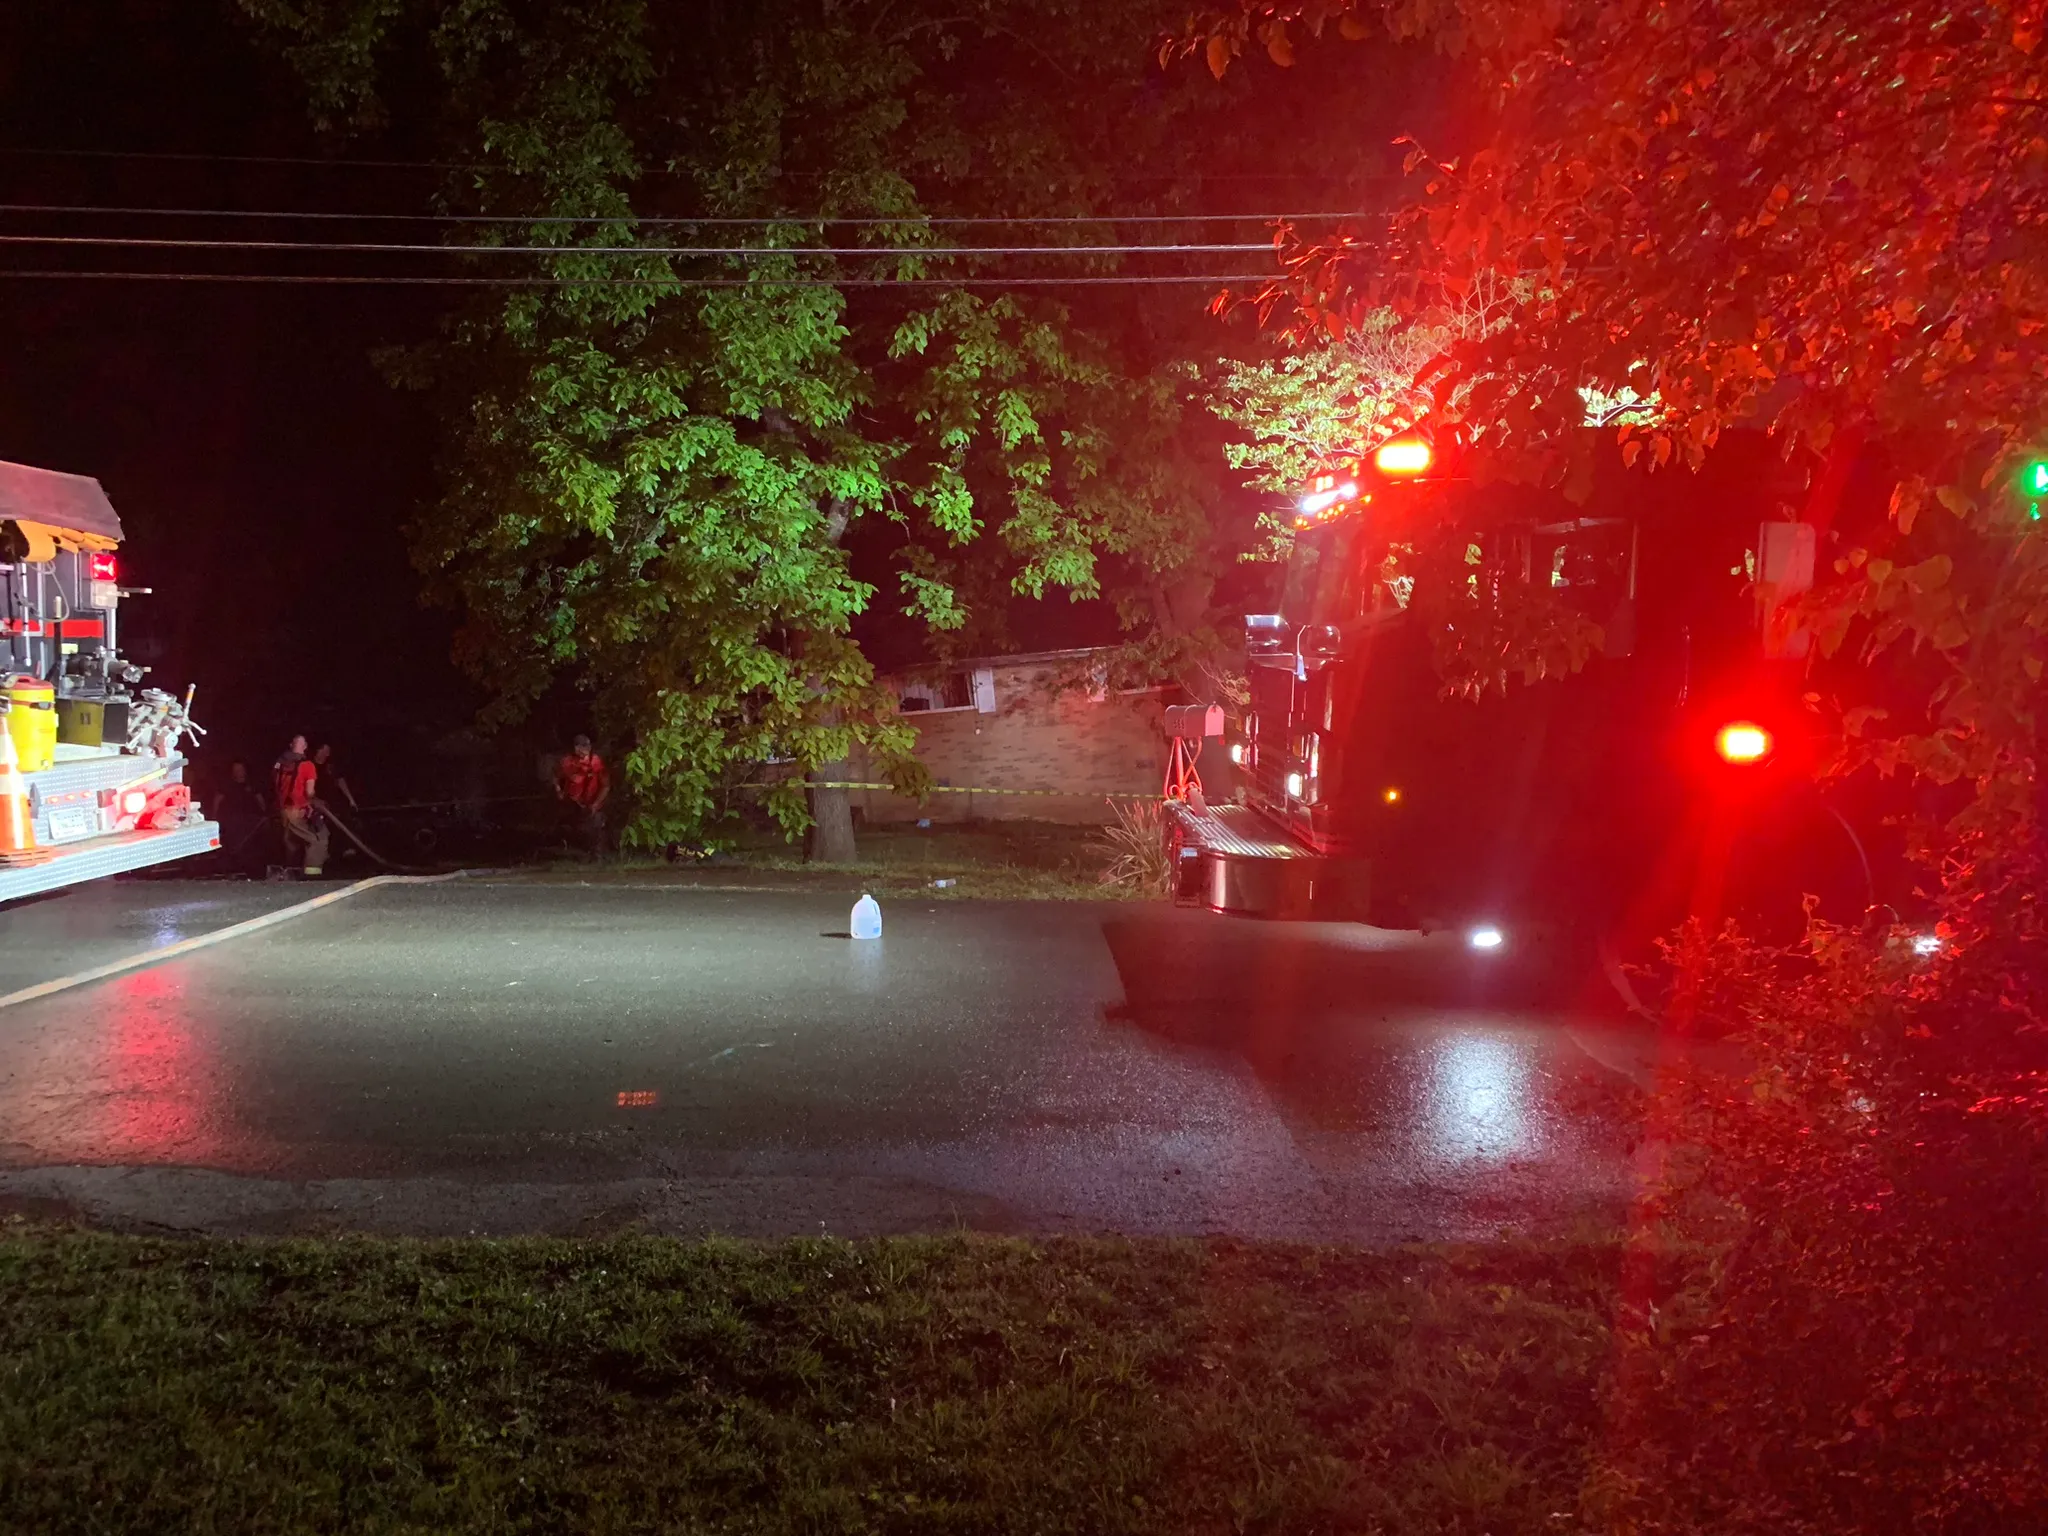 Walker County Man Dies in Overnight House Fire